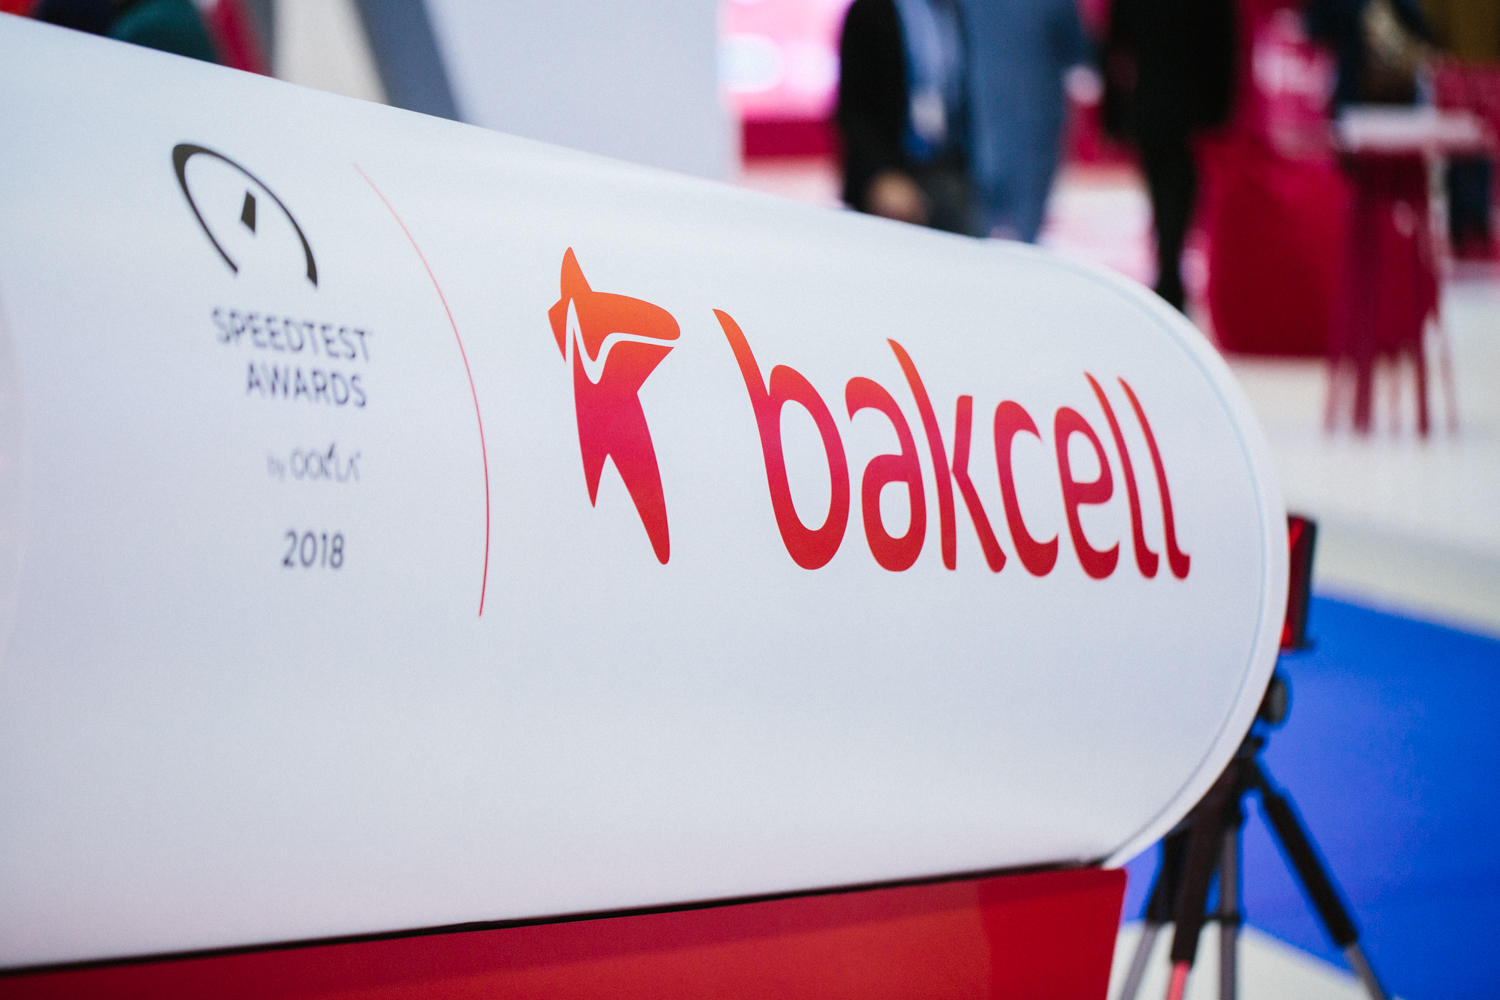 Bakcell на выставке Bakutel-2018: инновации, развлечения и подарки (ФОТО)